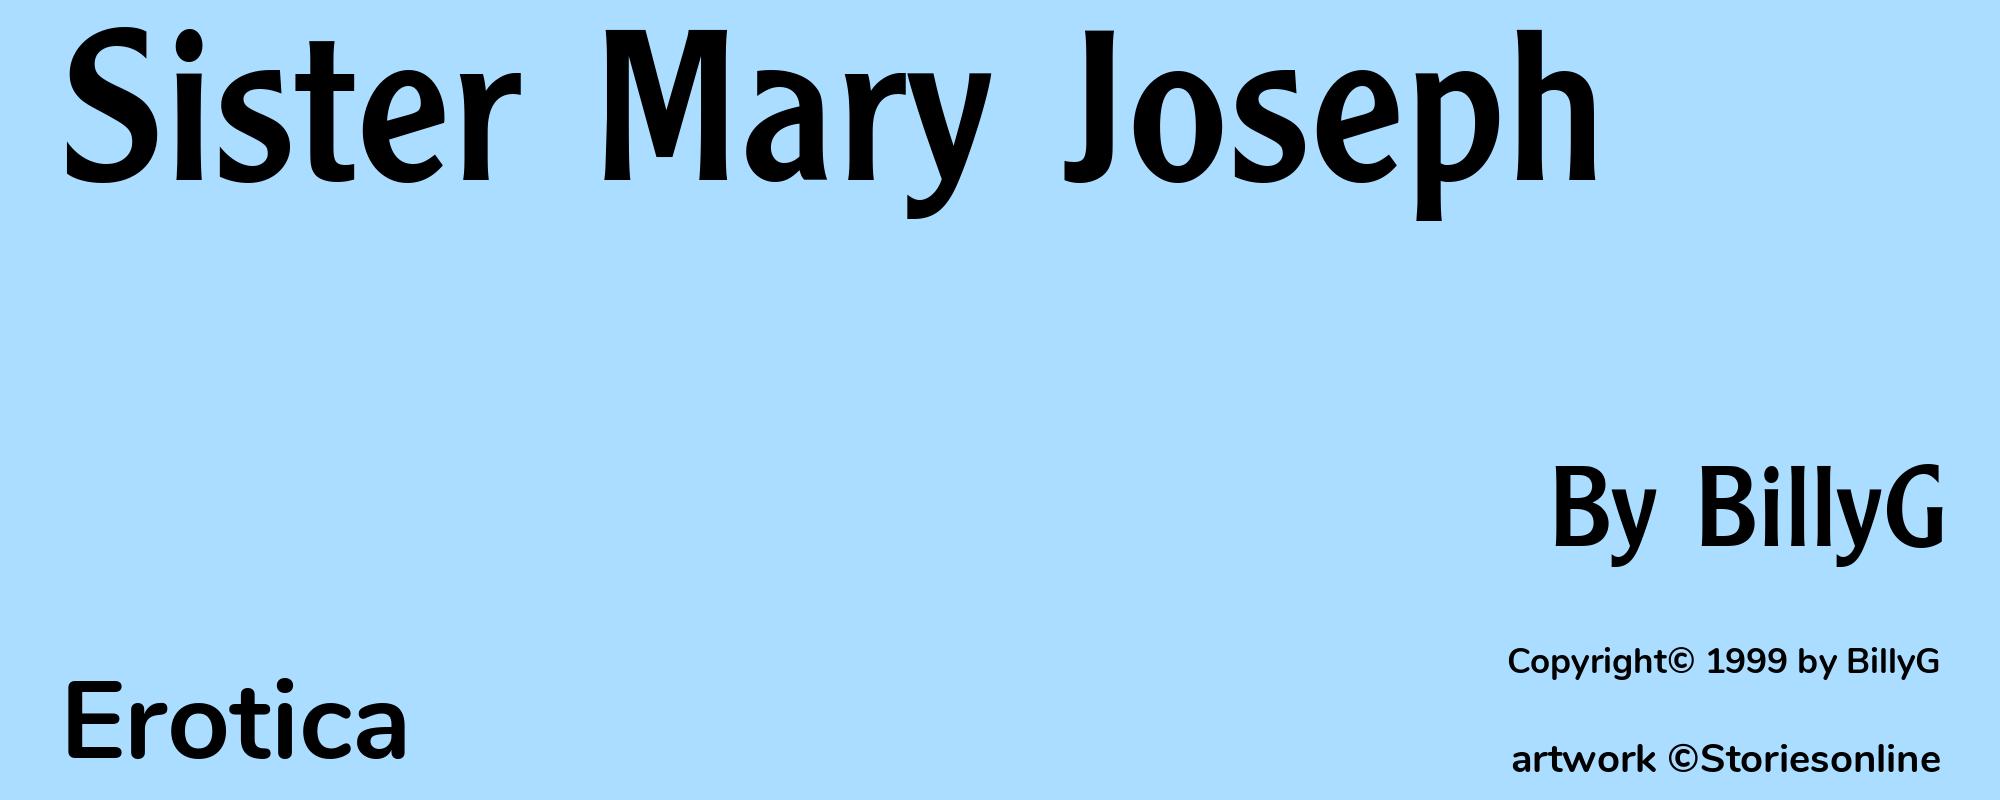 Sister Mary Joseph - Cover